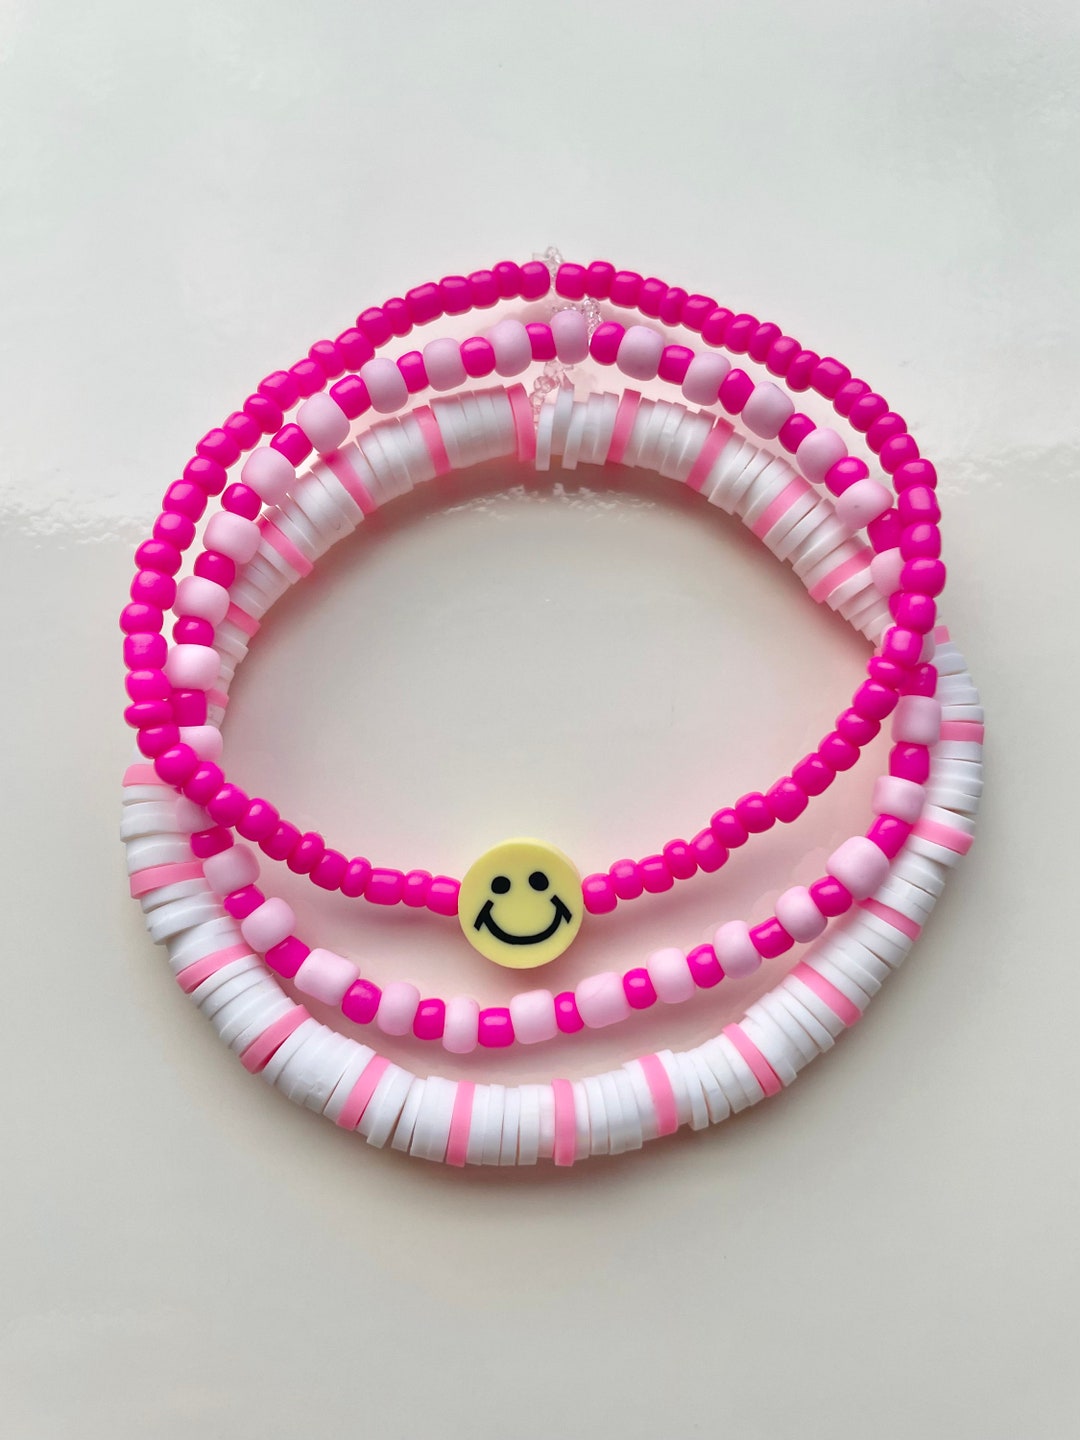 The Pink Bracelet Stack - Etsy